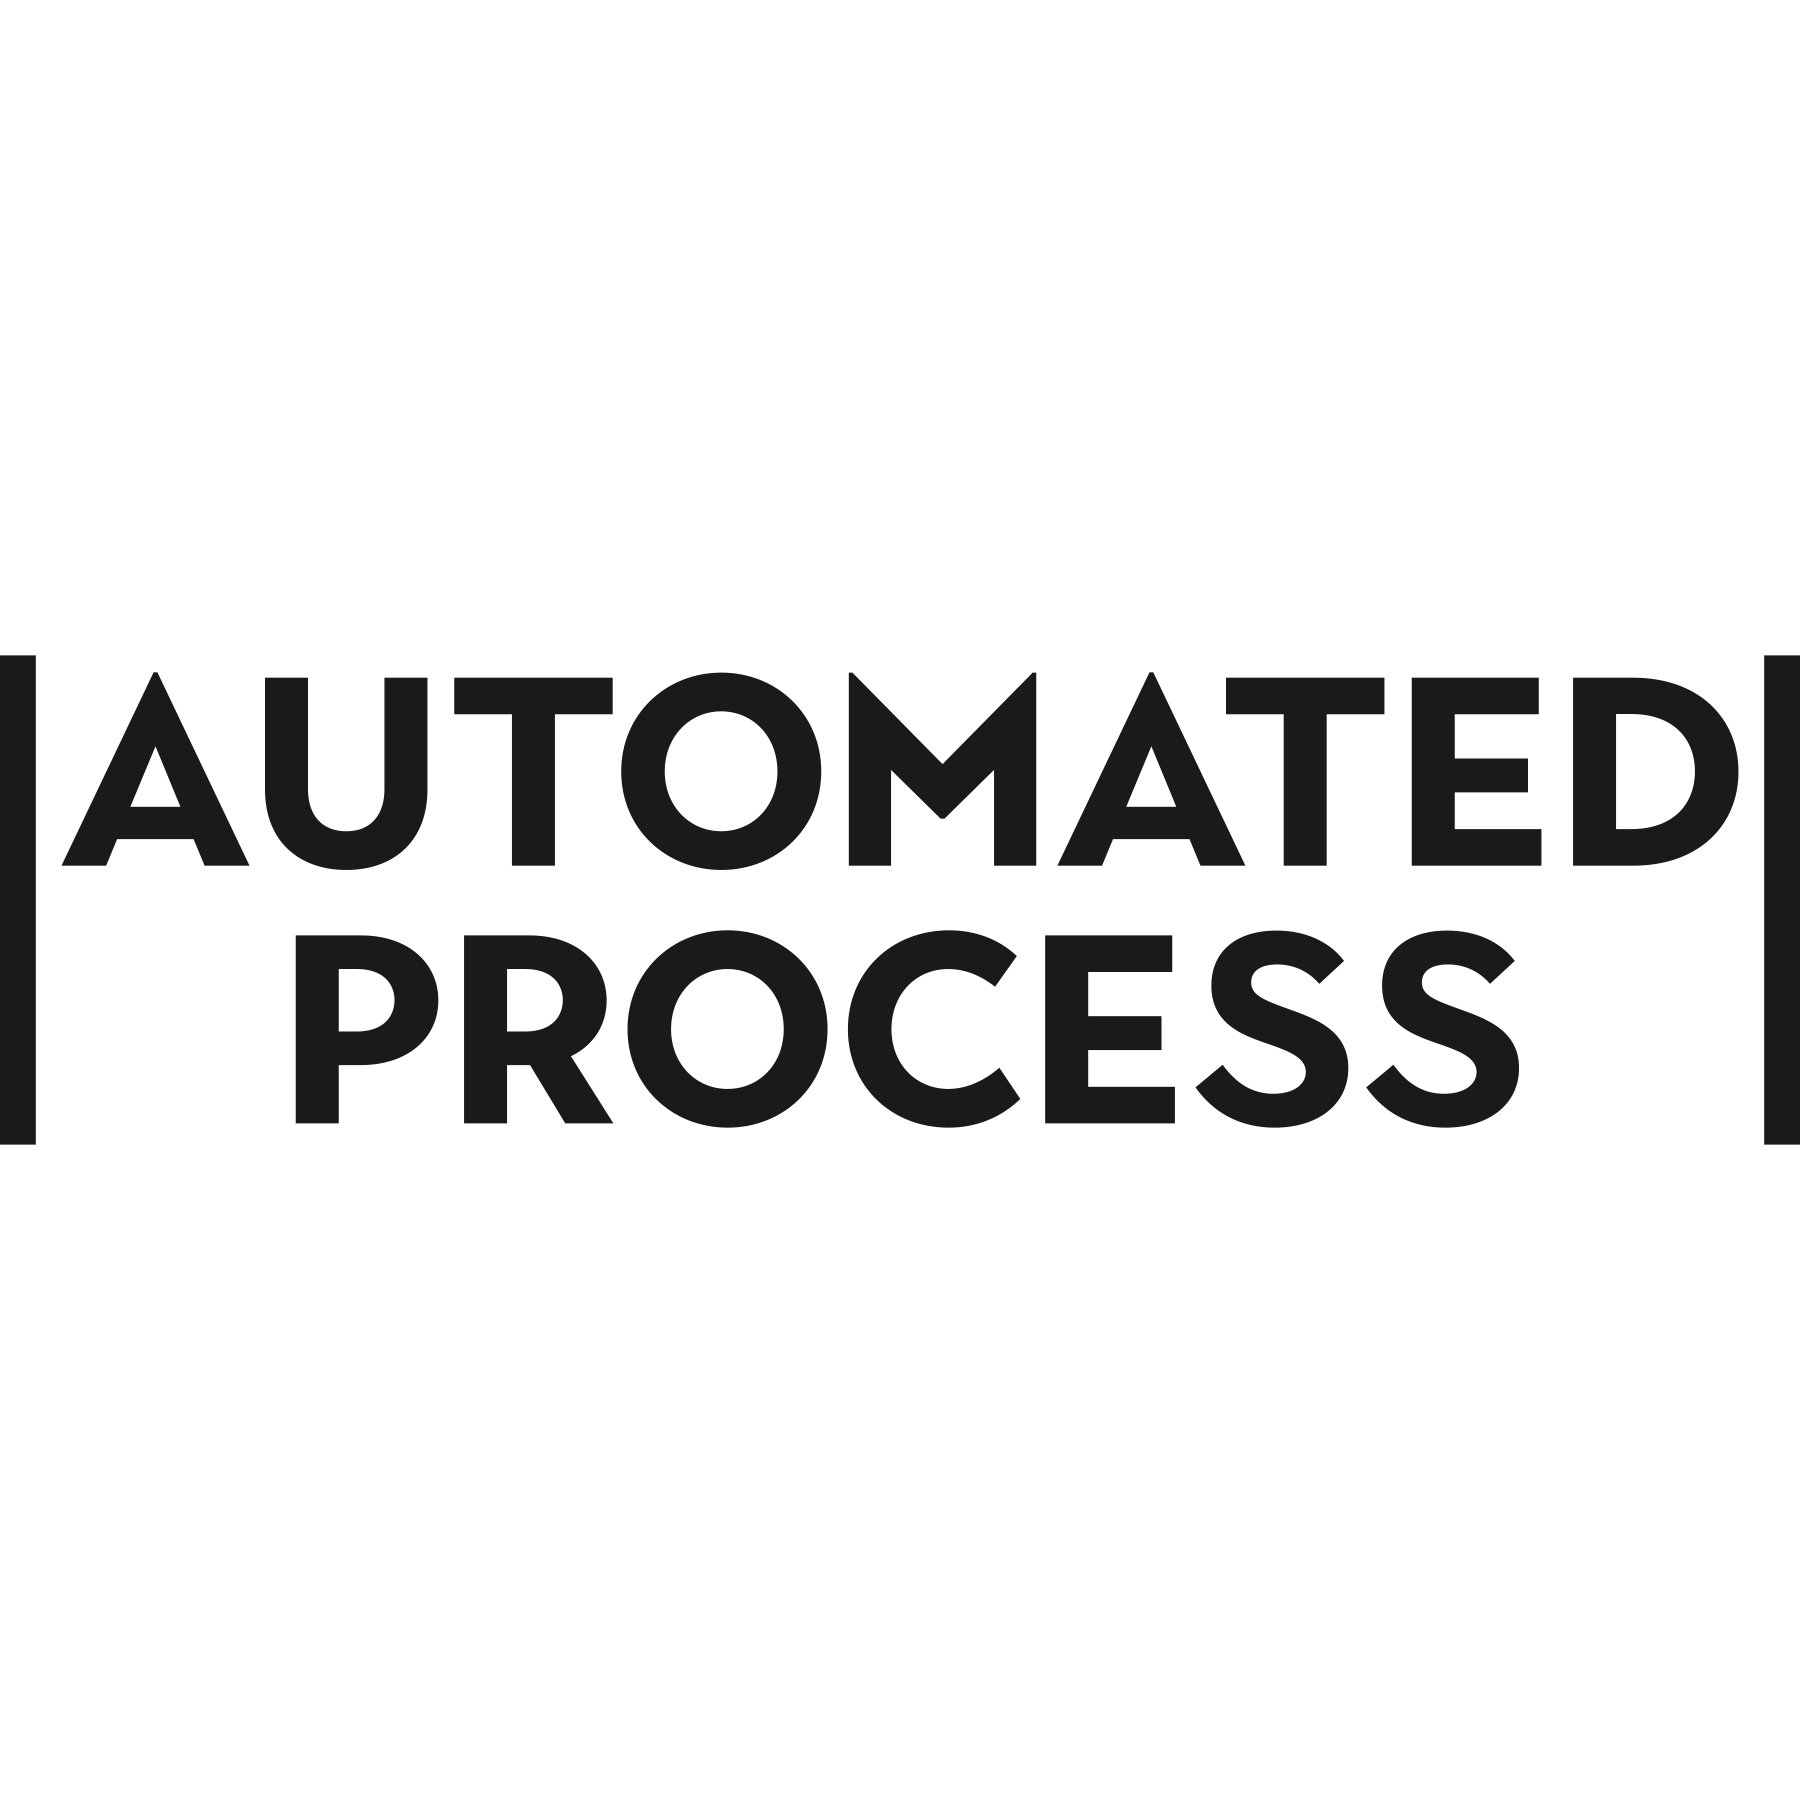 Automated Process